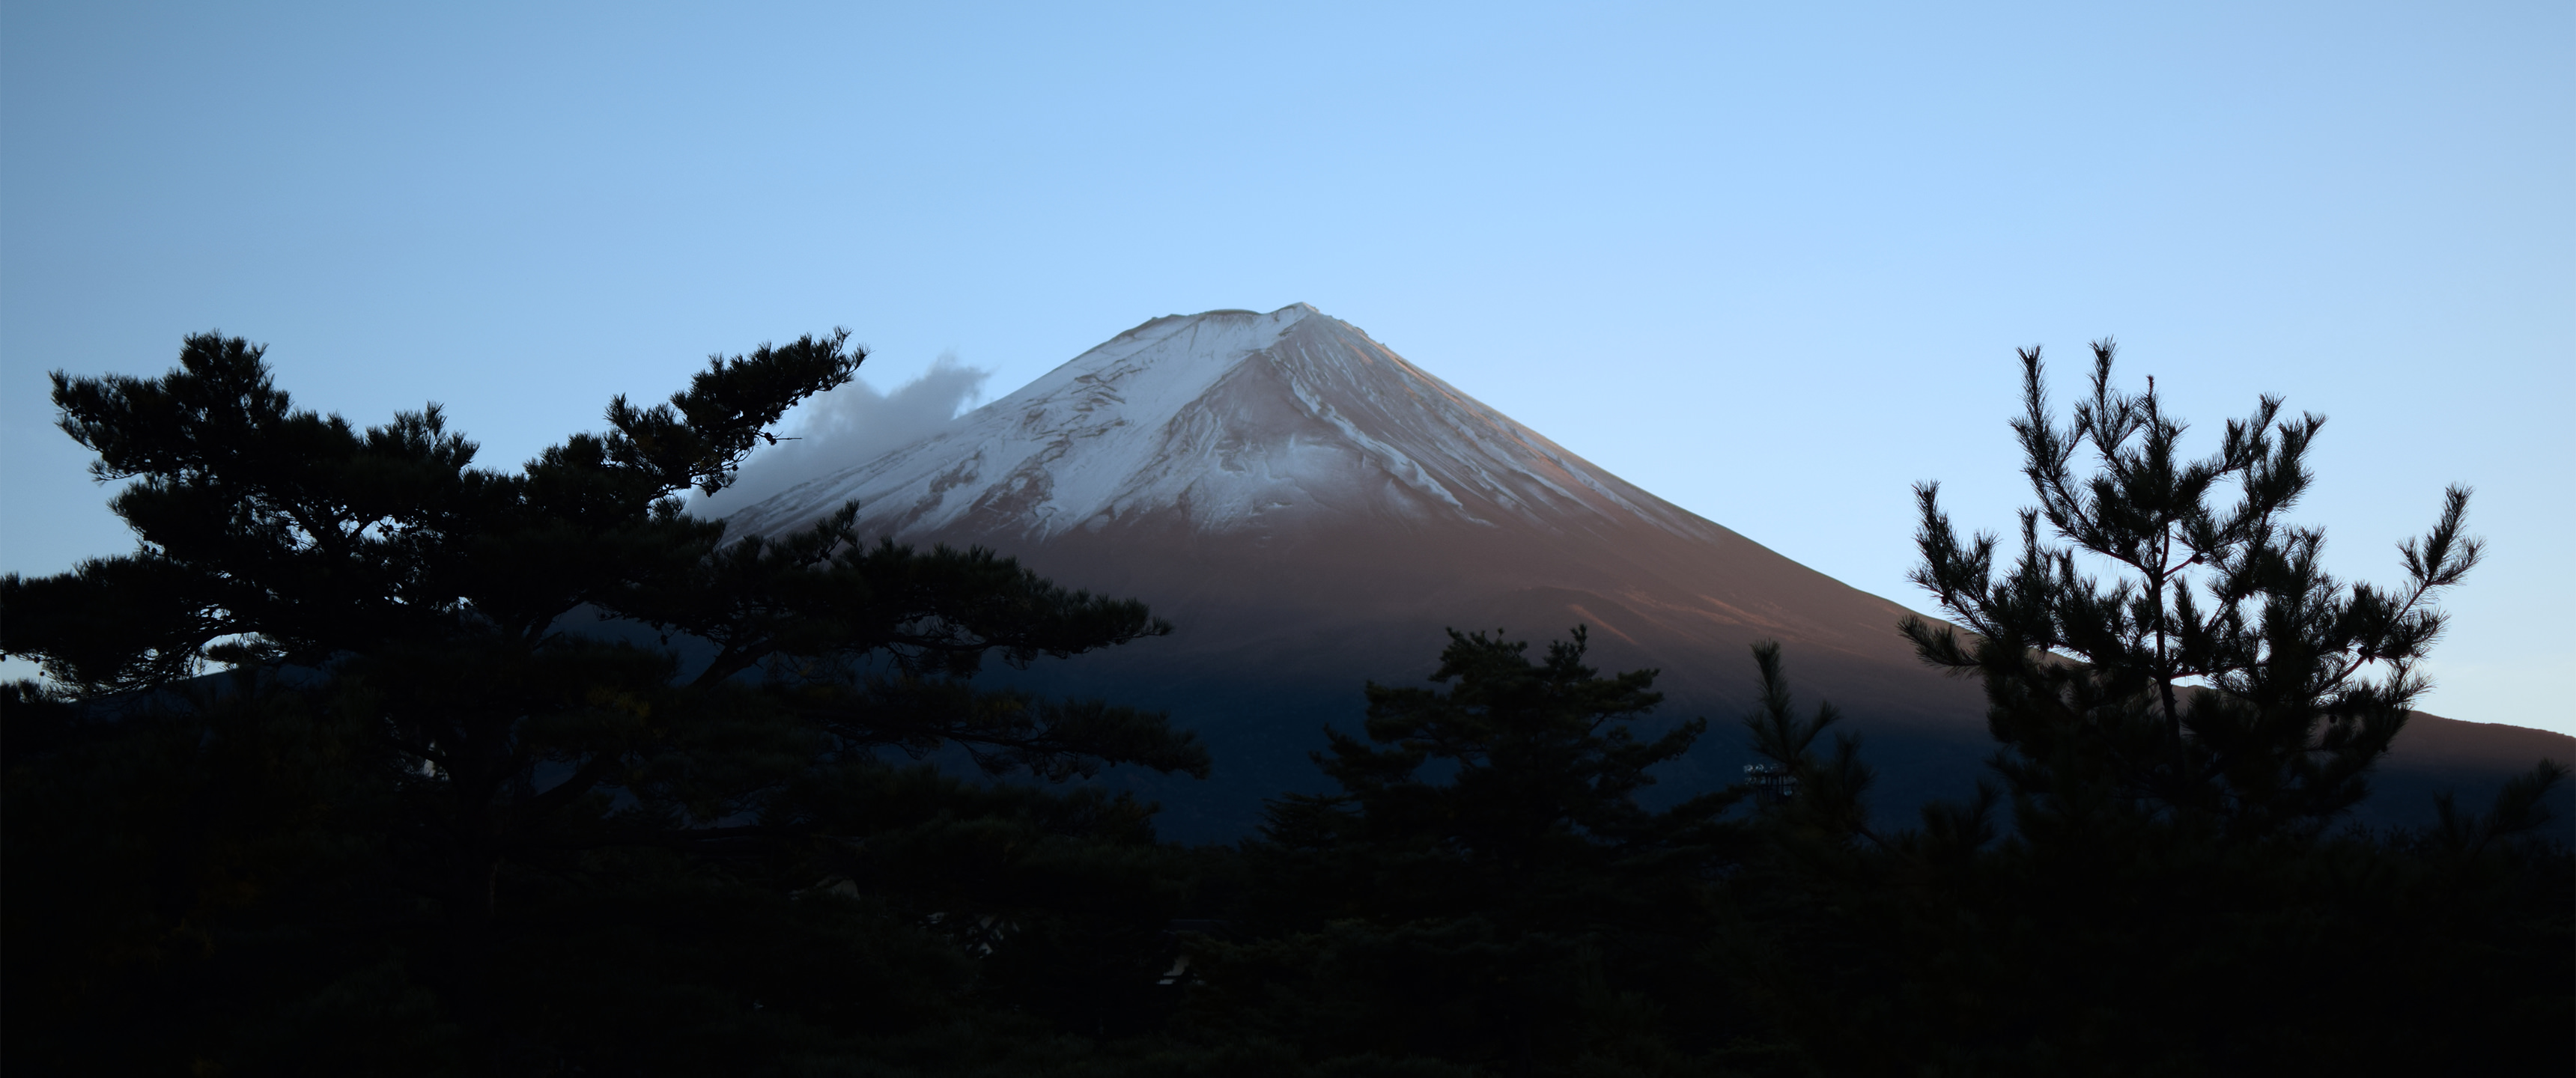 General 3440x1440 mountains landscape Japan outdoors nature volcano trees sky hazy snow snowy peak